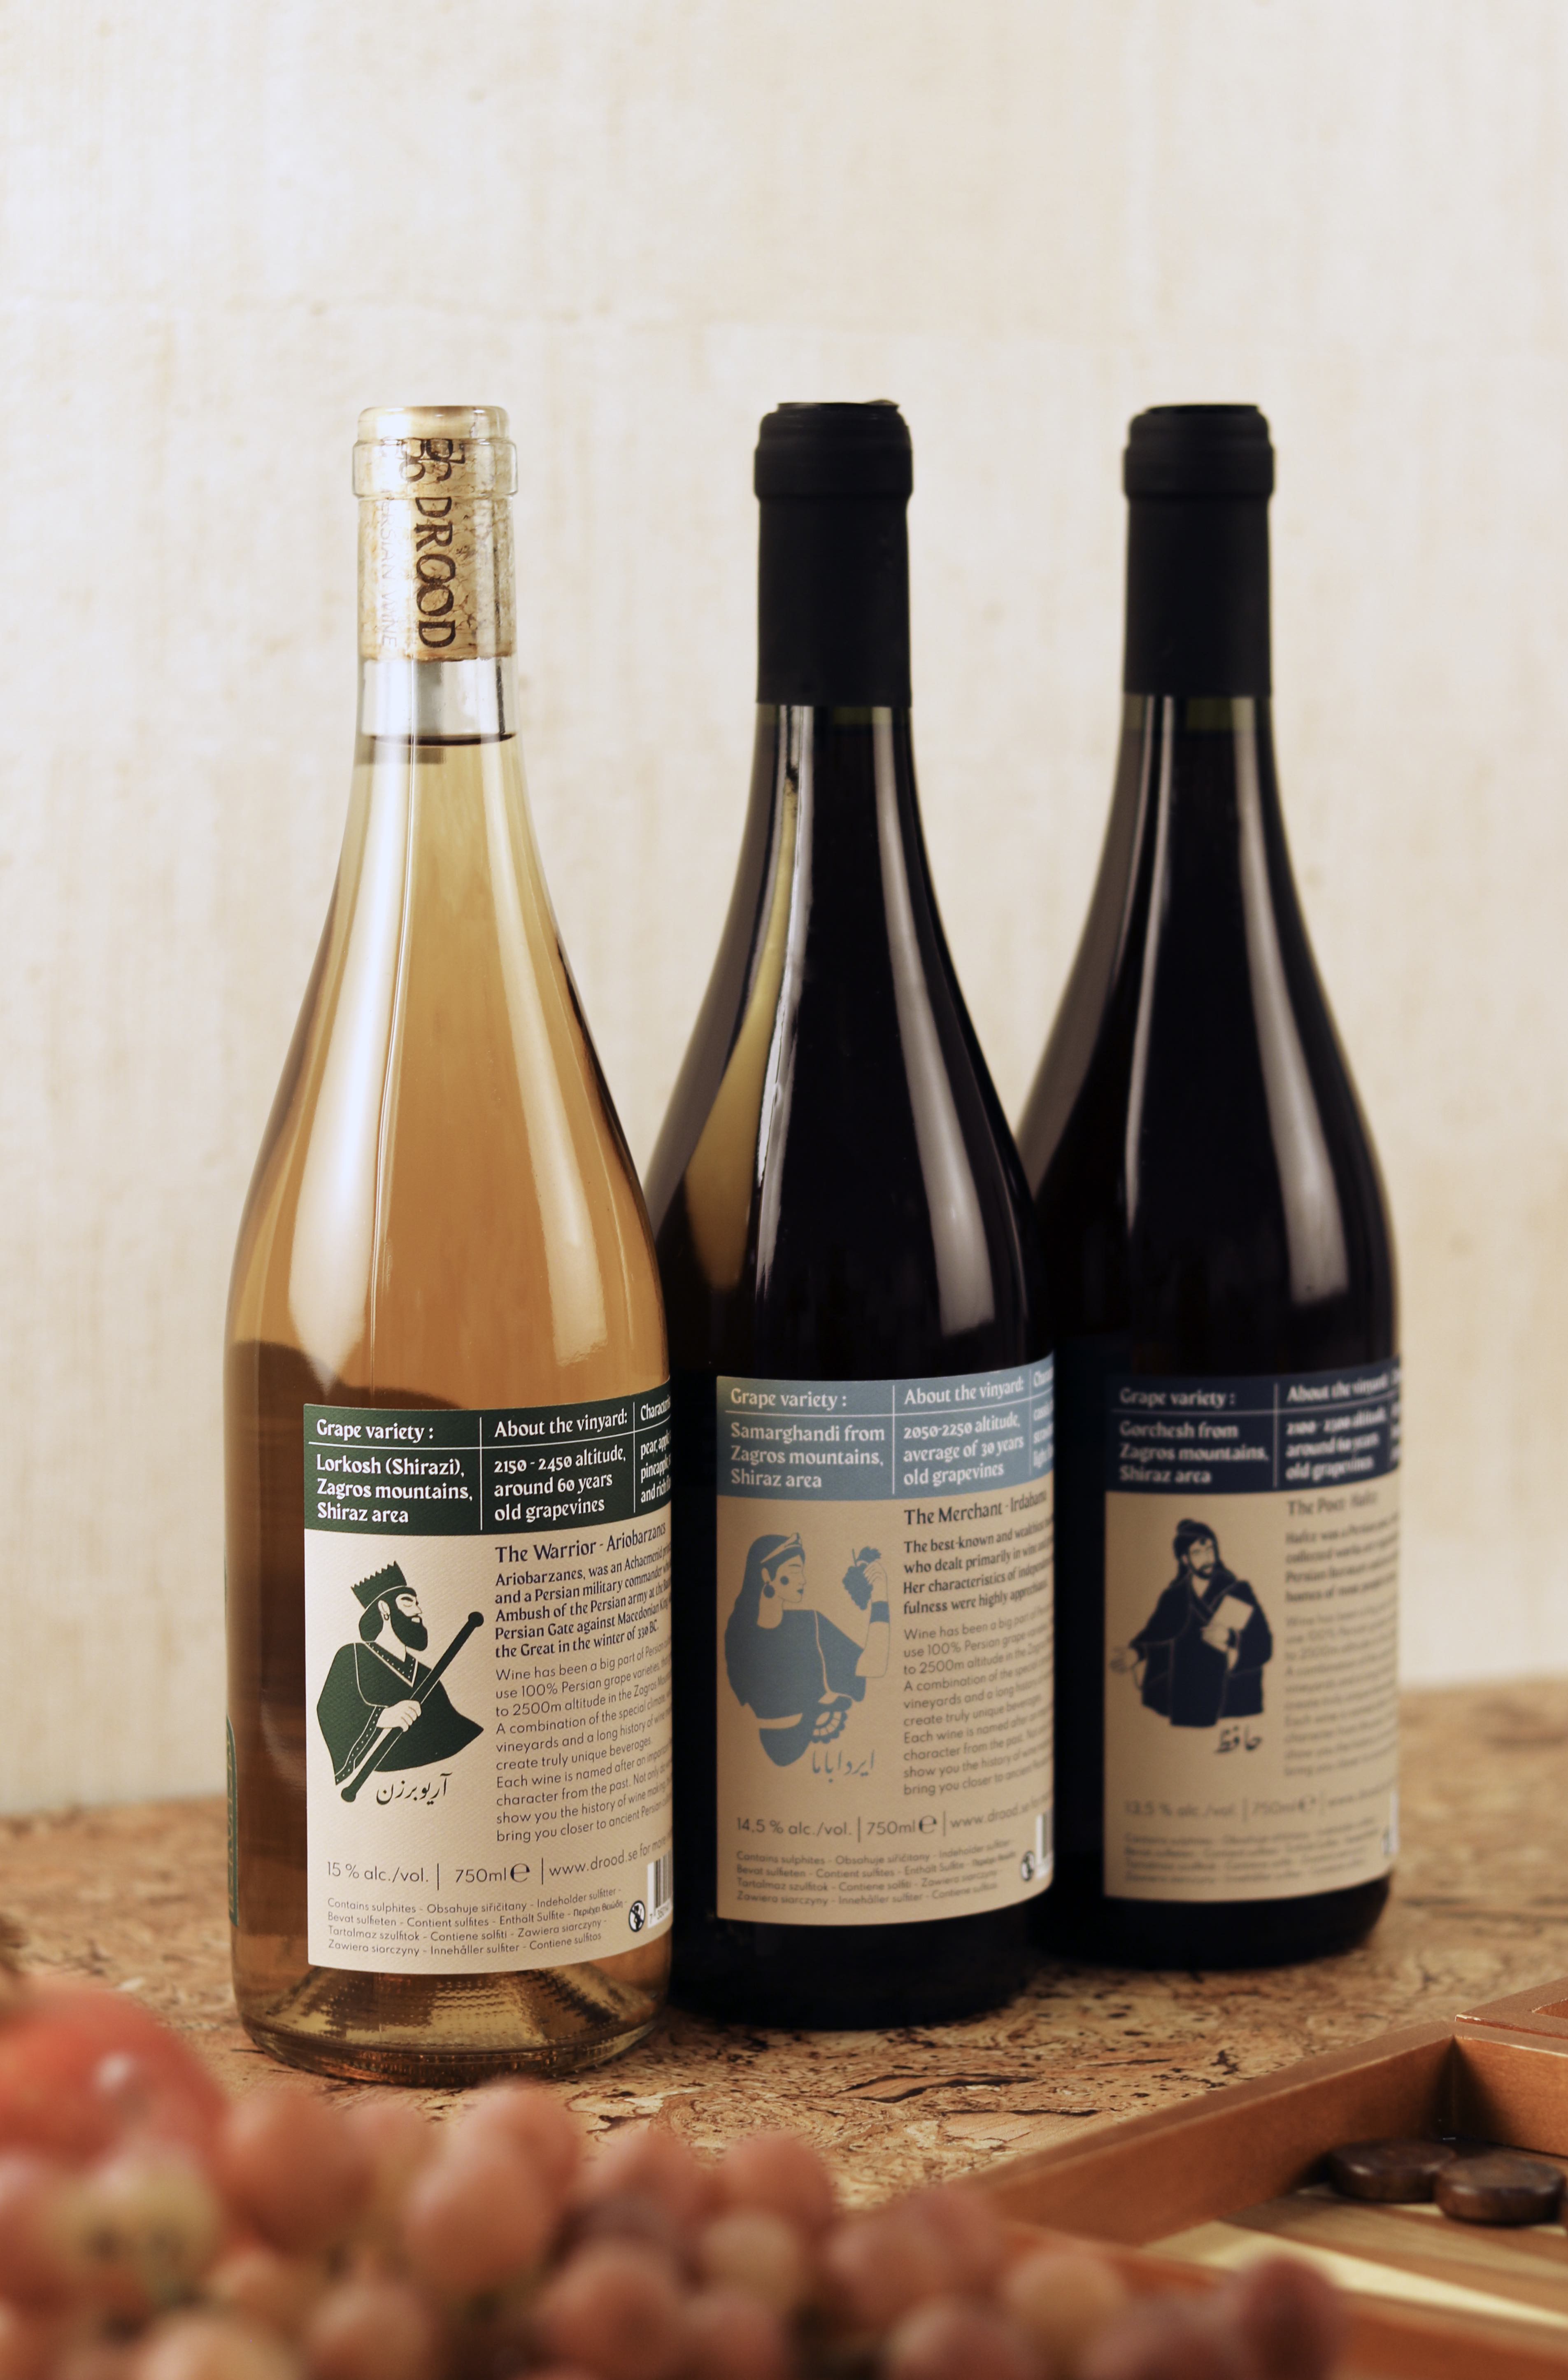 Packaging Design: Drood Persian Wine